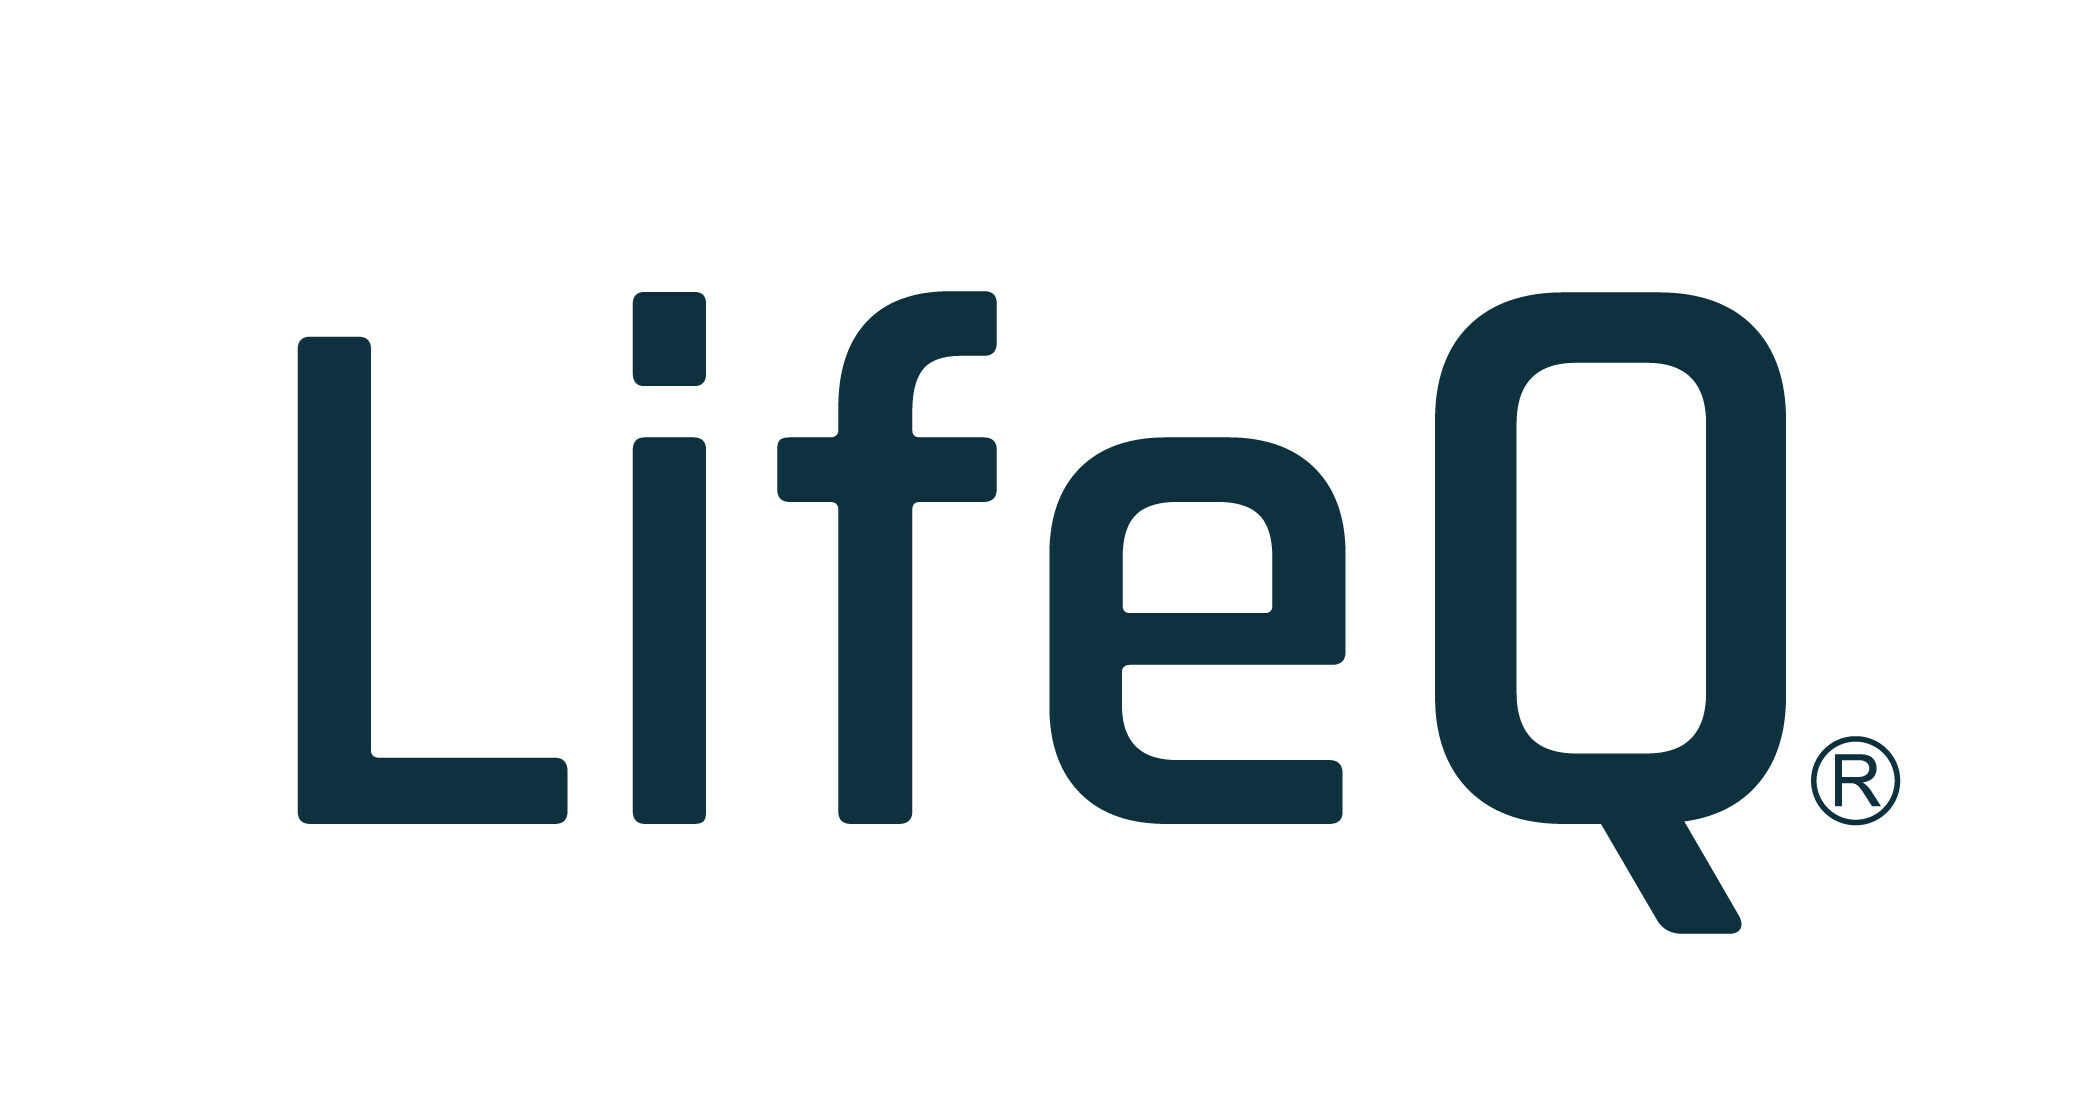 LifeQ Logo